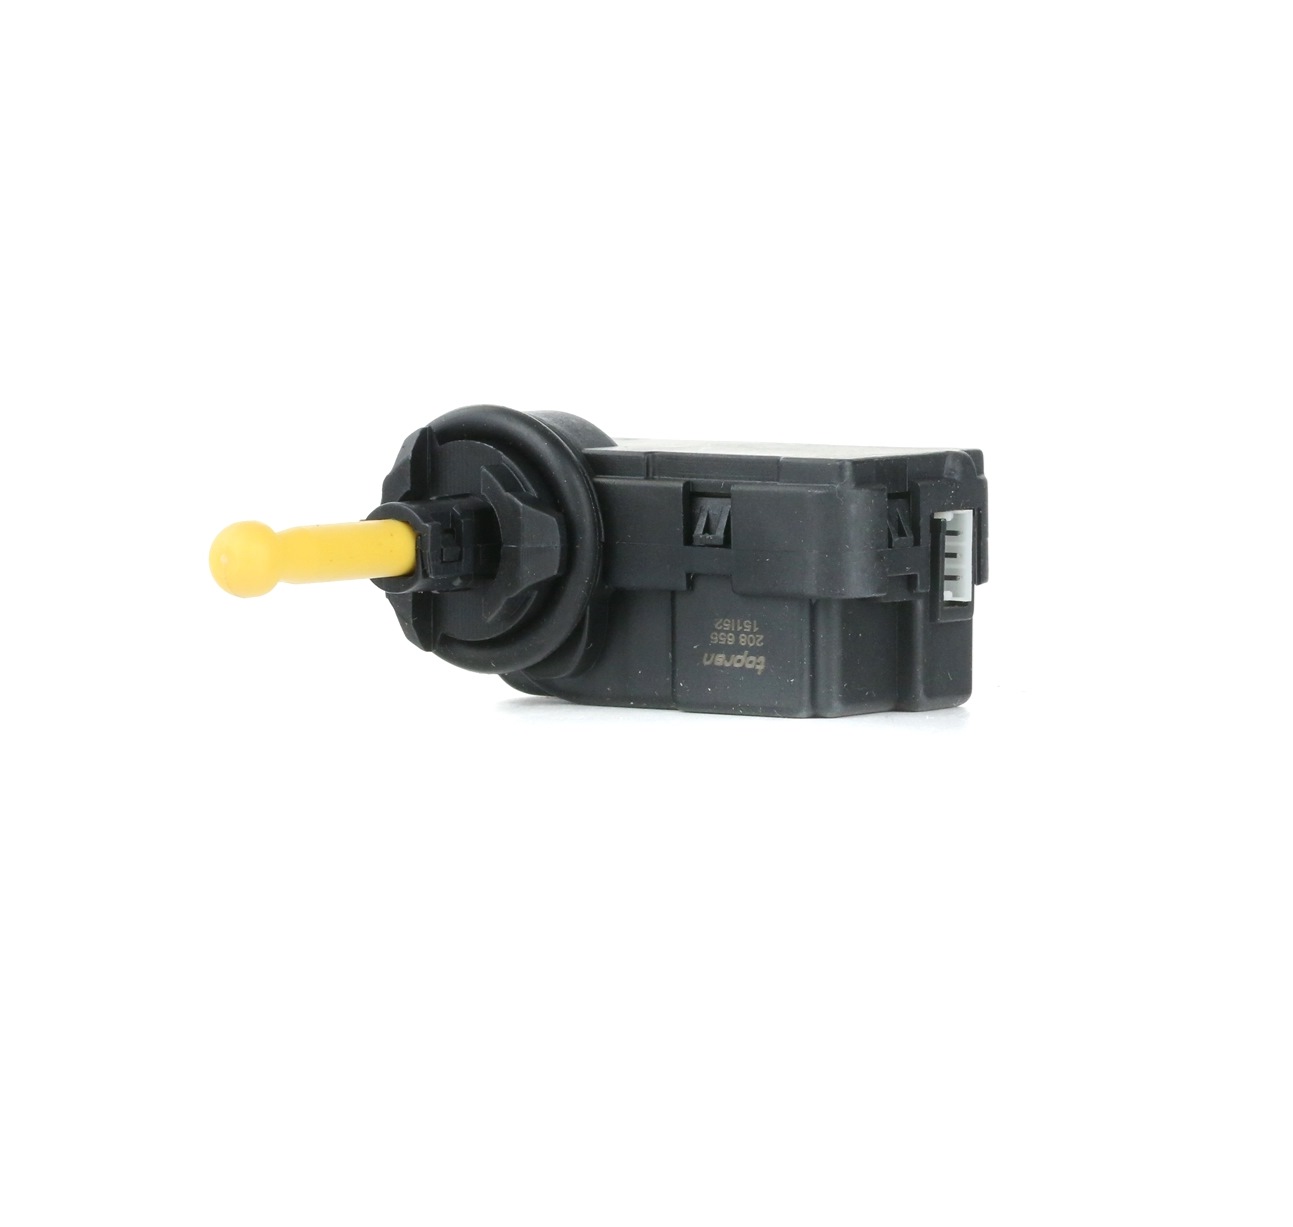 Image of TOPRAN Headlight Motor OPEL,VAUXHALL 208 655 1207525,9114334 Headlight Leveling Motor,Control, headlight range adjustment